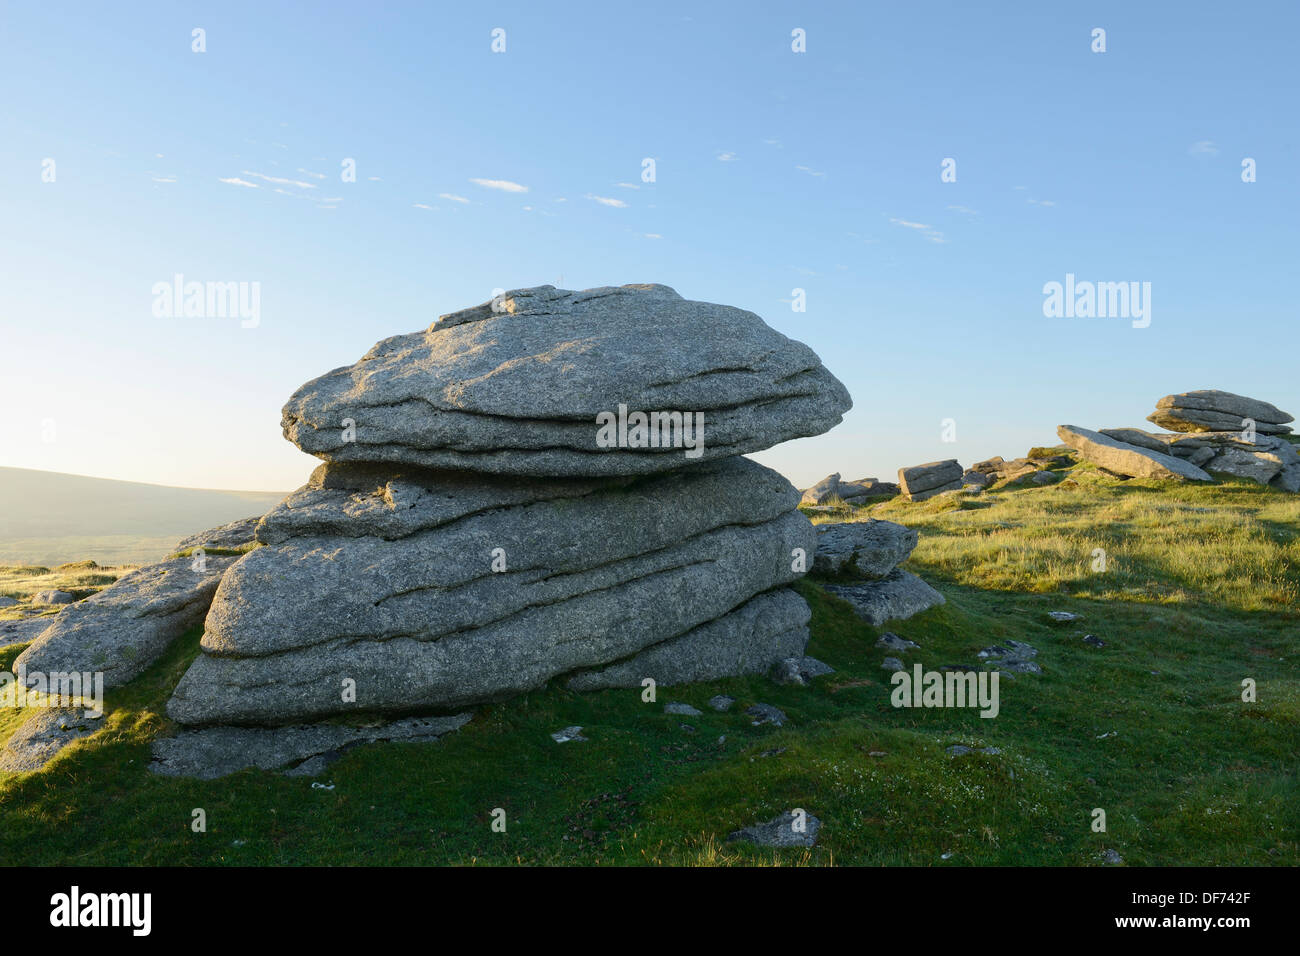 A rocking or logan stone on Belstone Common, Dartmoor, UK. Stock Photo